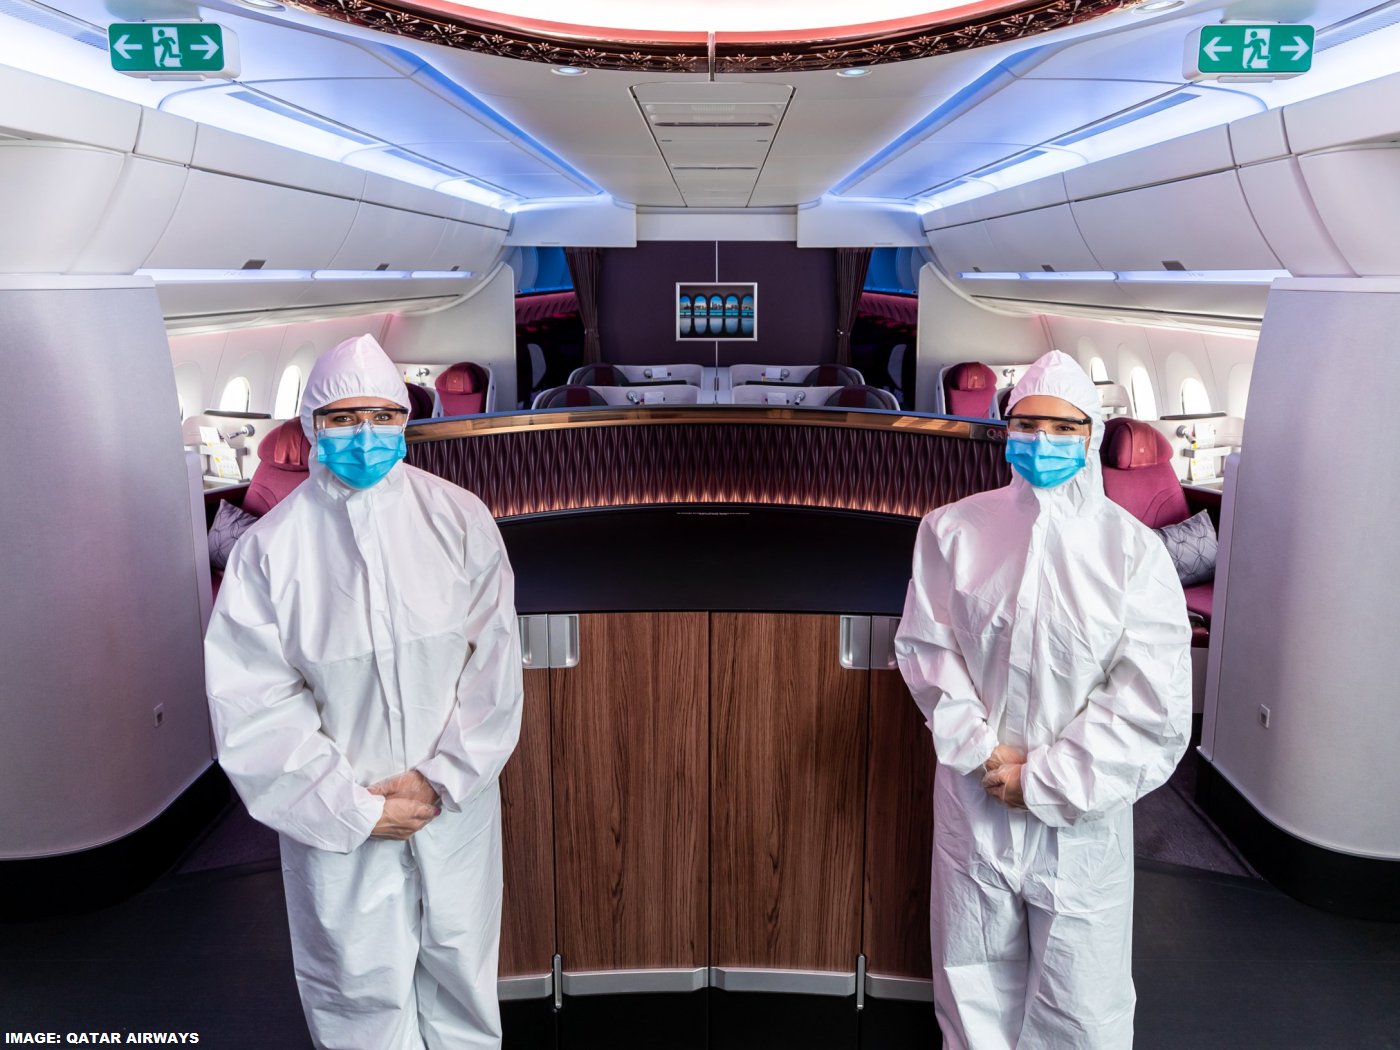 Qatar Airways Flight Attendant PPEs